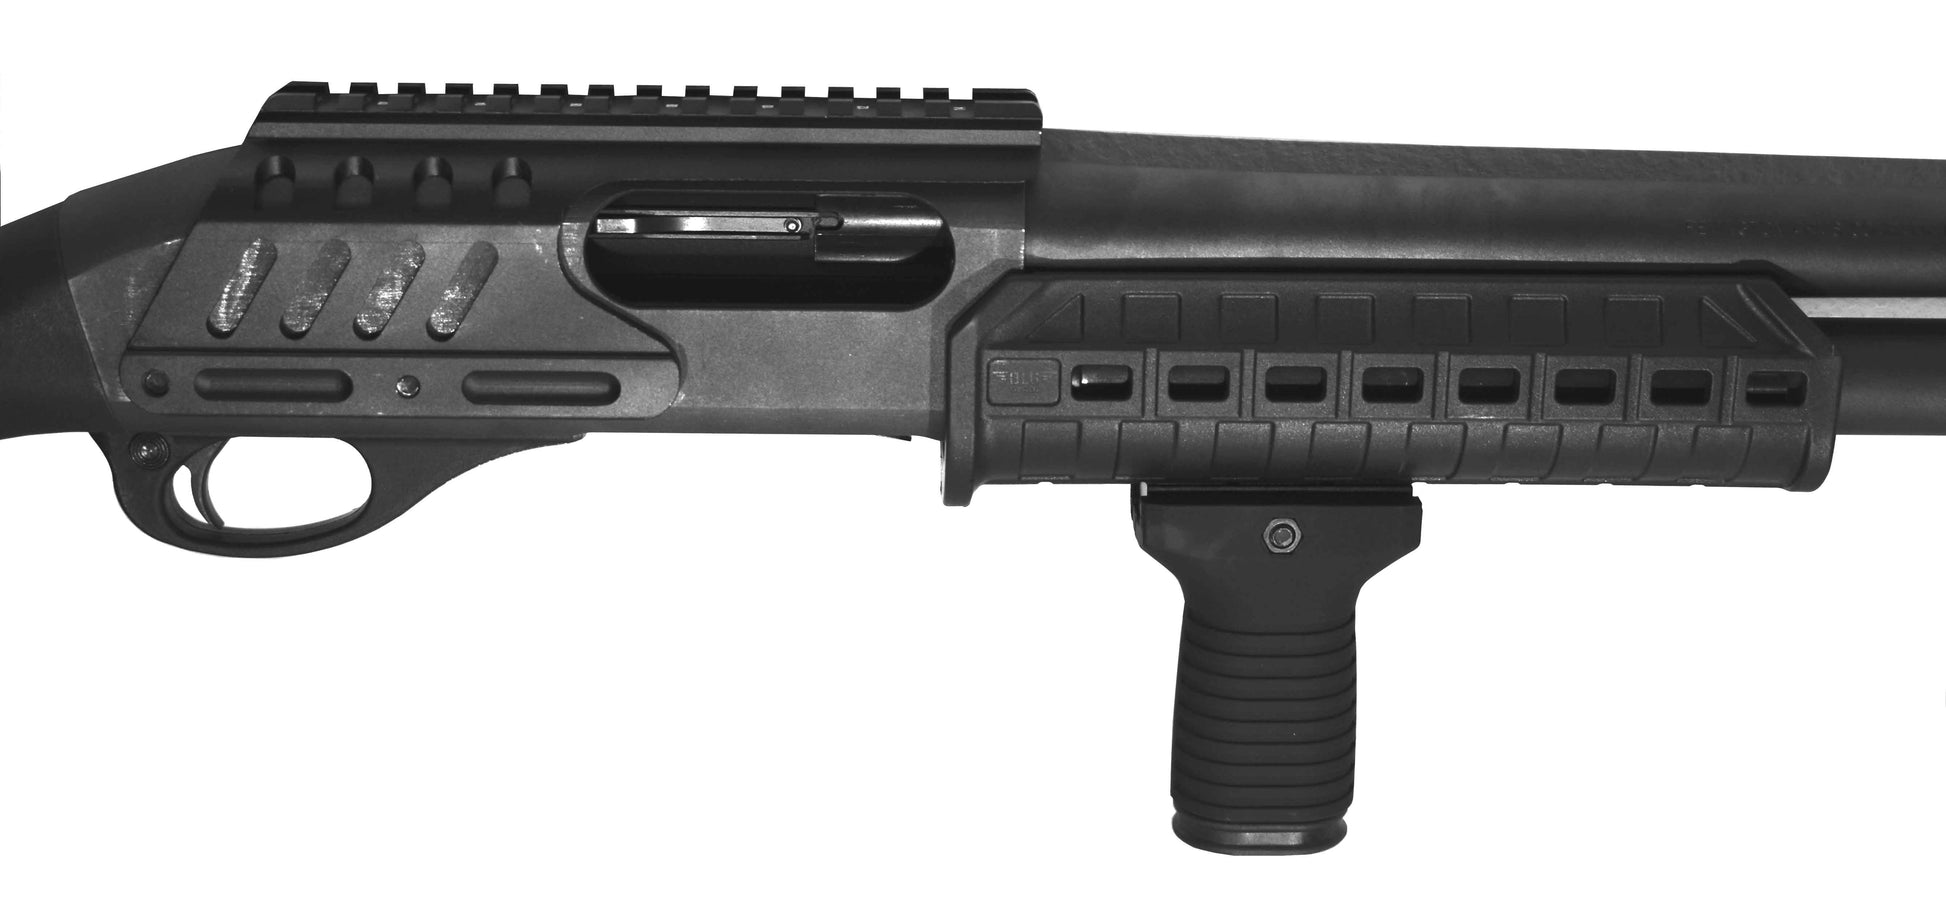 shotgun vertical grip black.